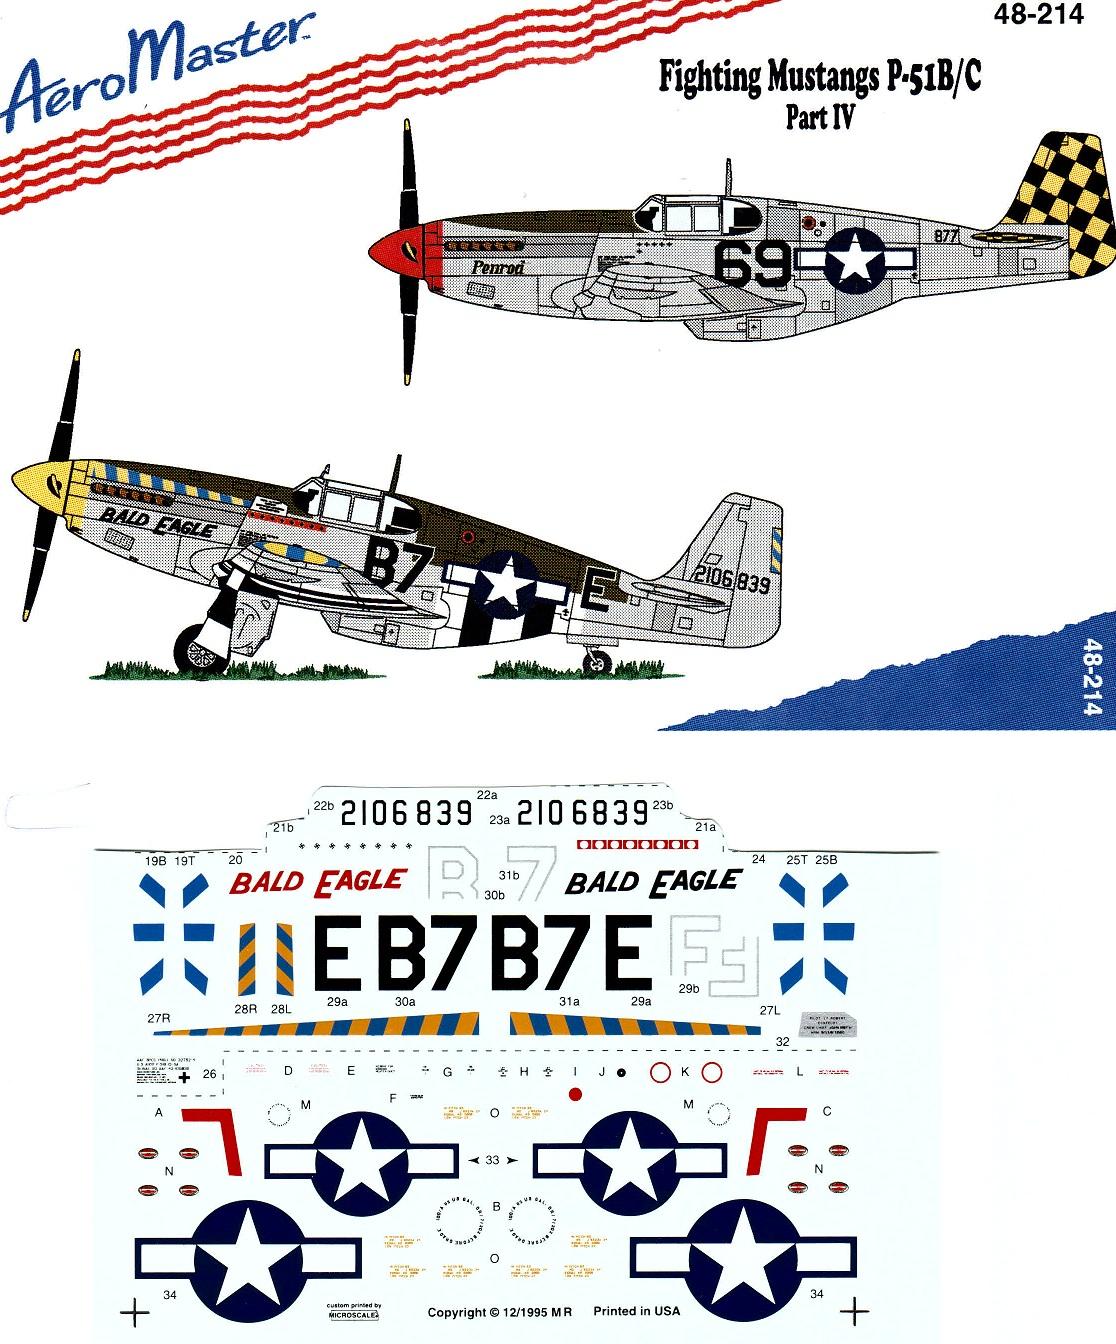 Aeromaster 48-214 P-51B matrica

800.-Ft